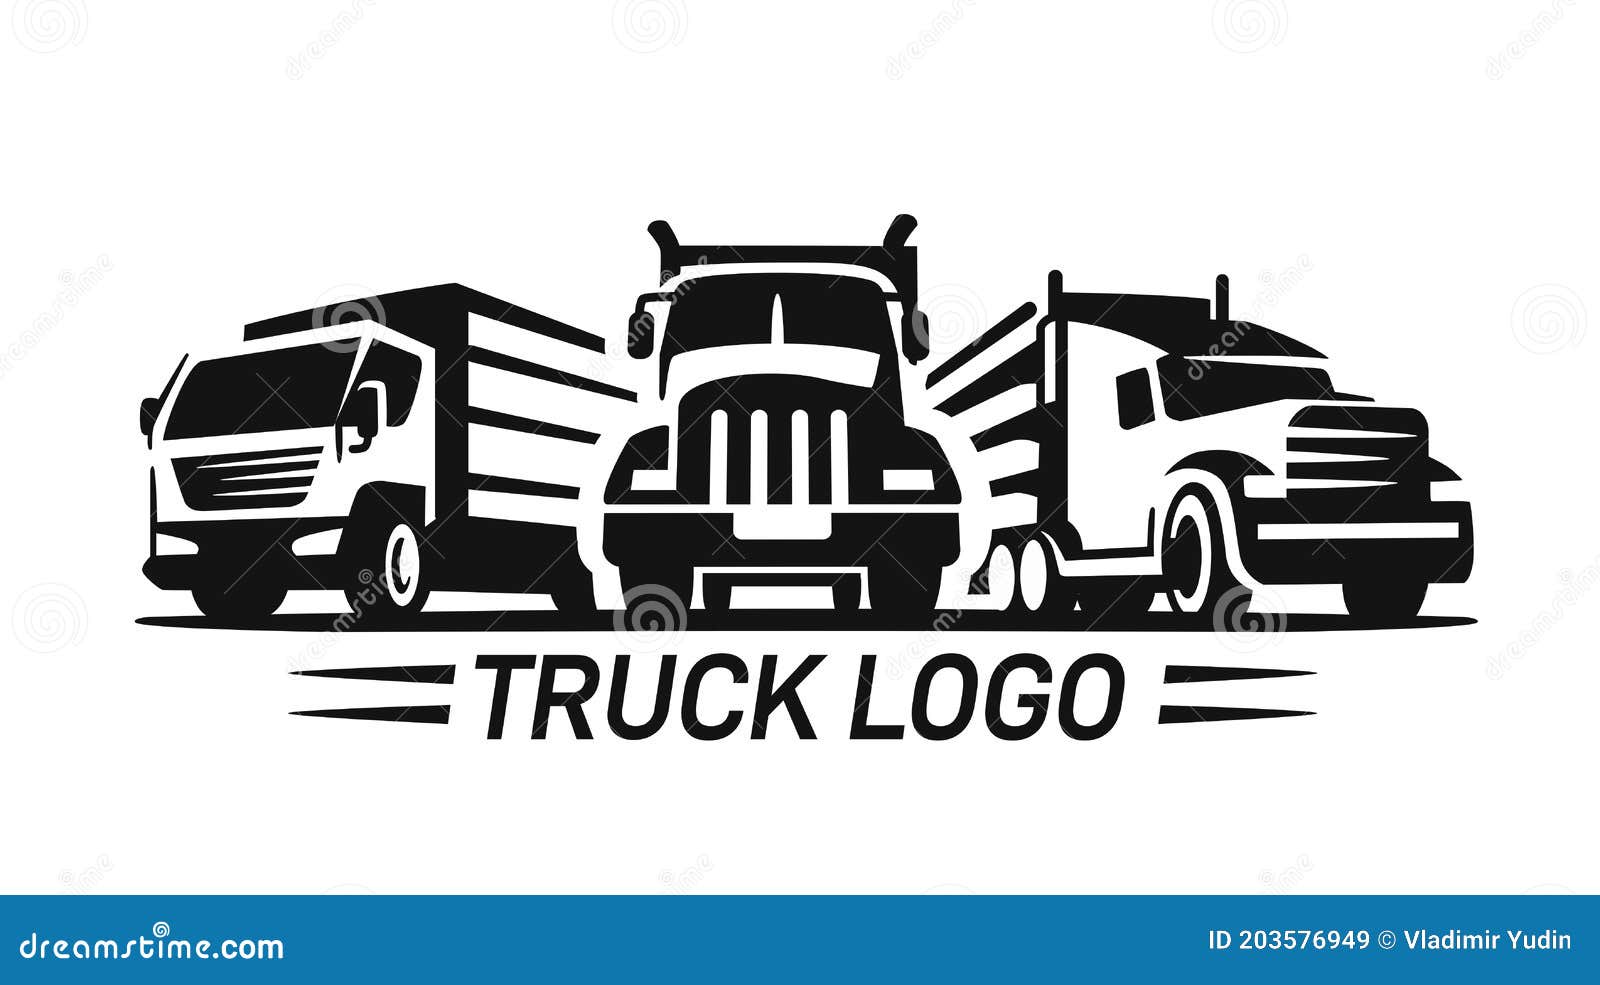 Big truck logos